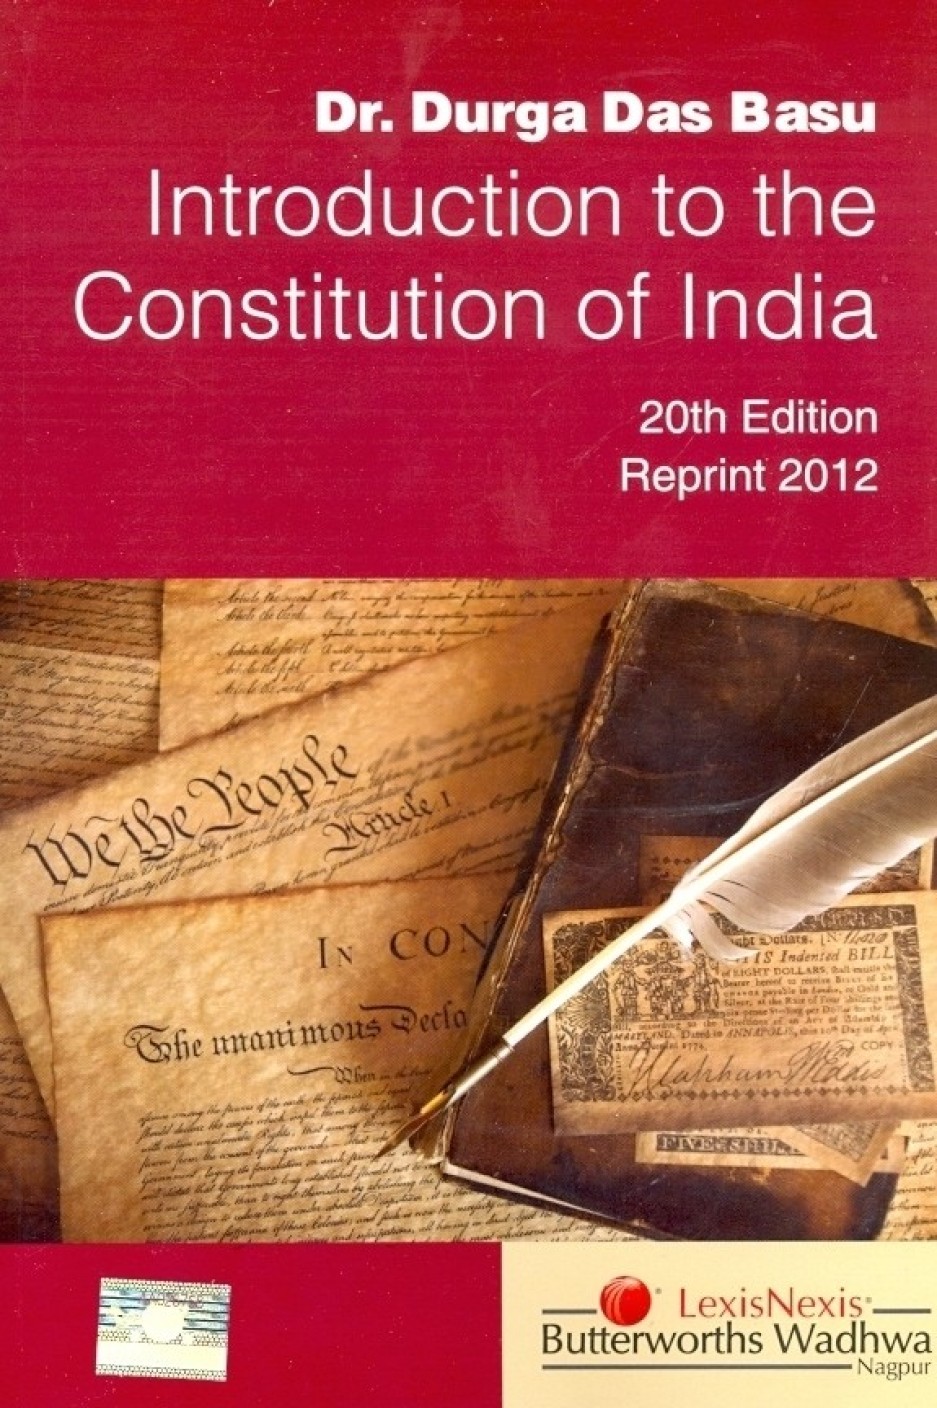 Constitution of india book pdf download